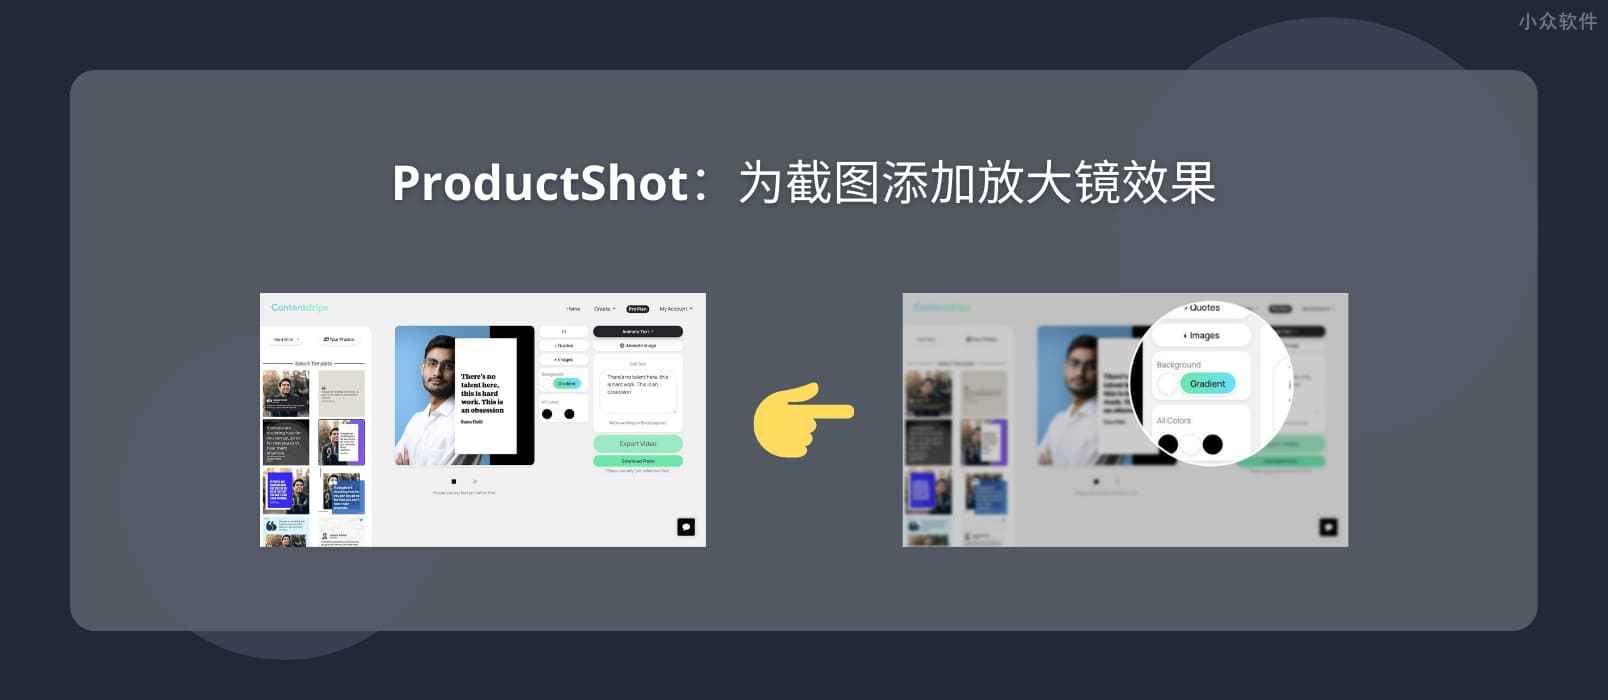 ProductShot - 为截图添加放大镜效果[Web]